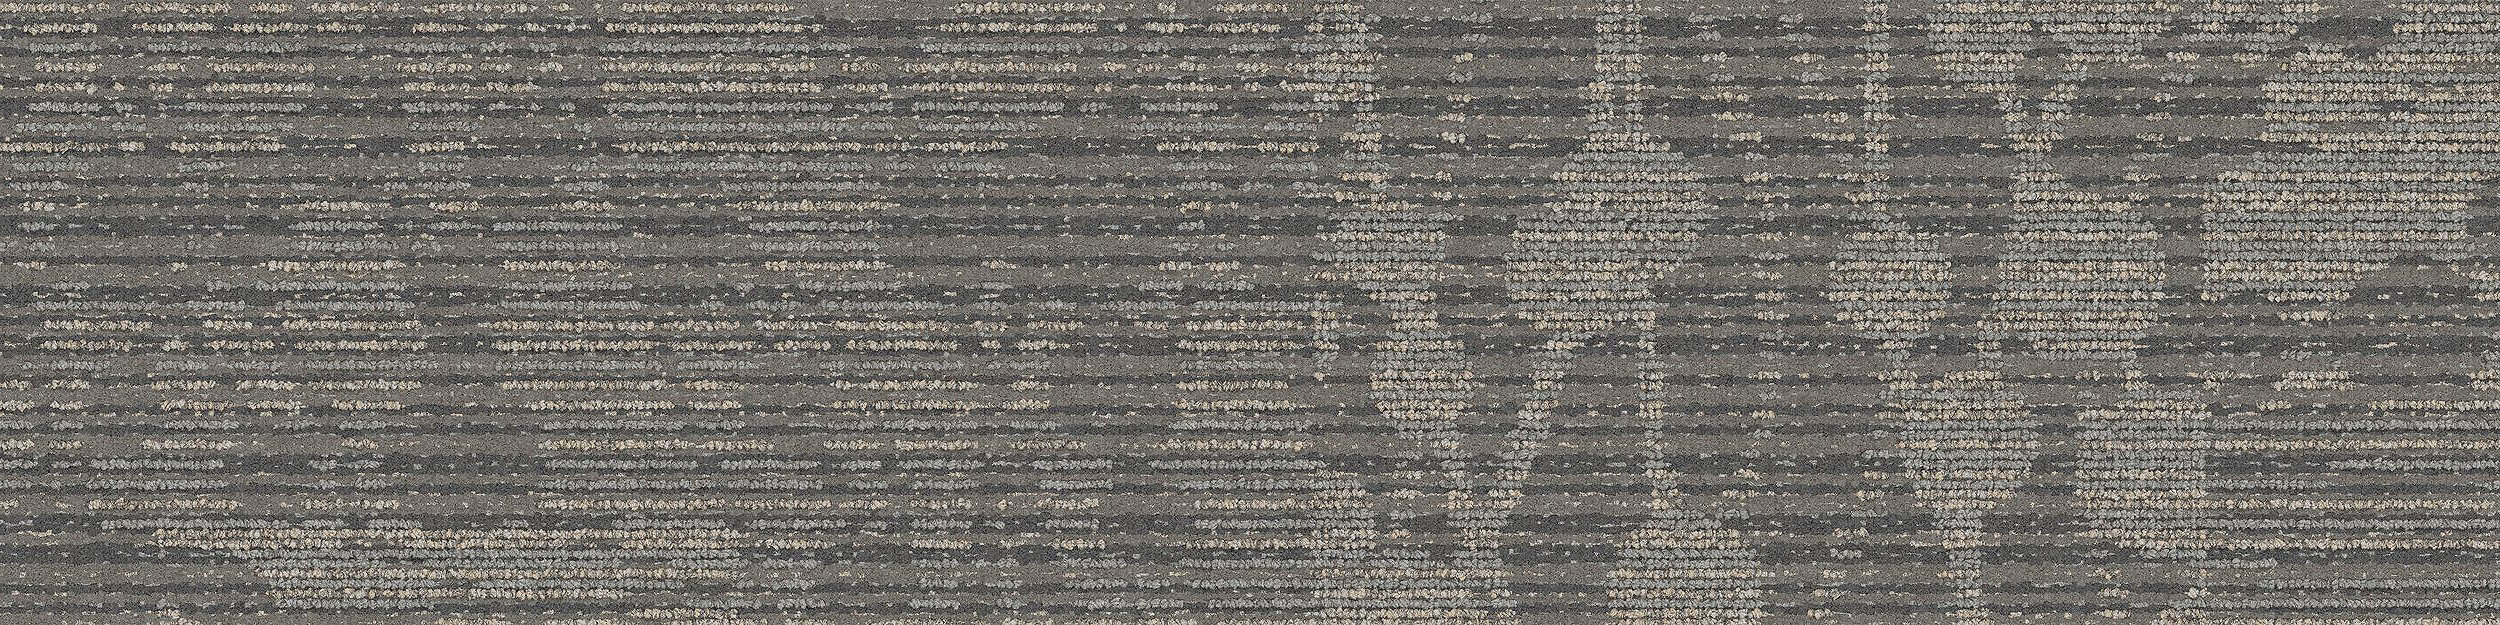 WE154 Carpet Tile In Mica imagen número 4